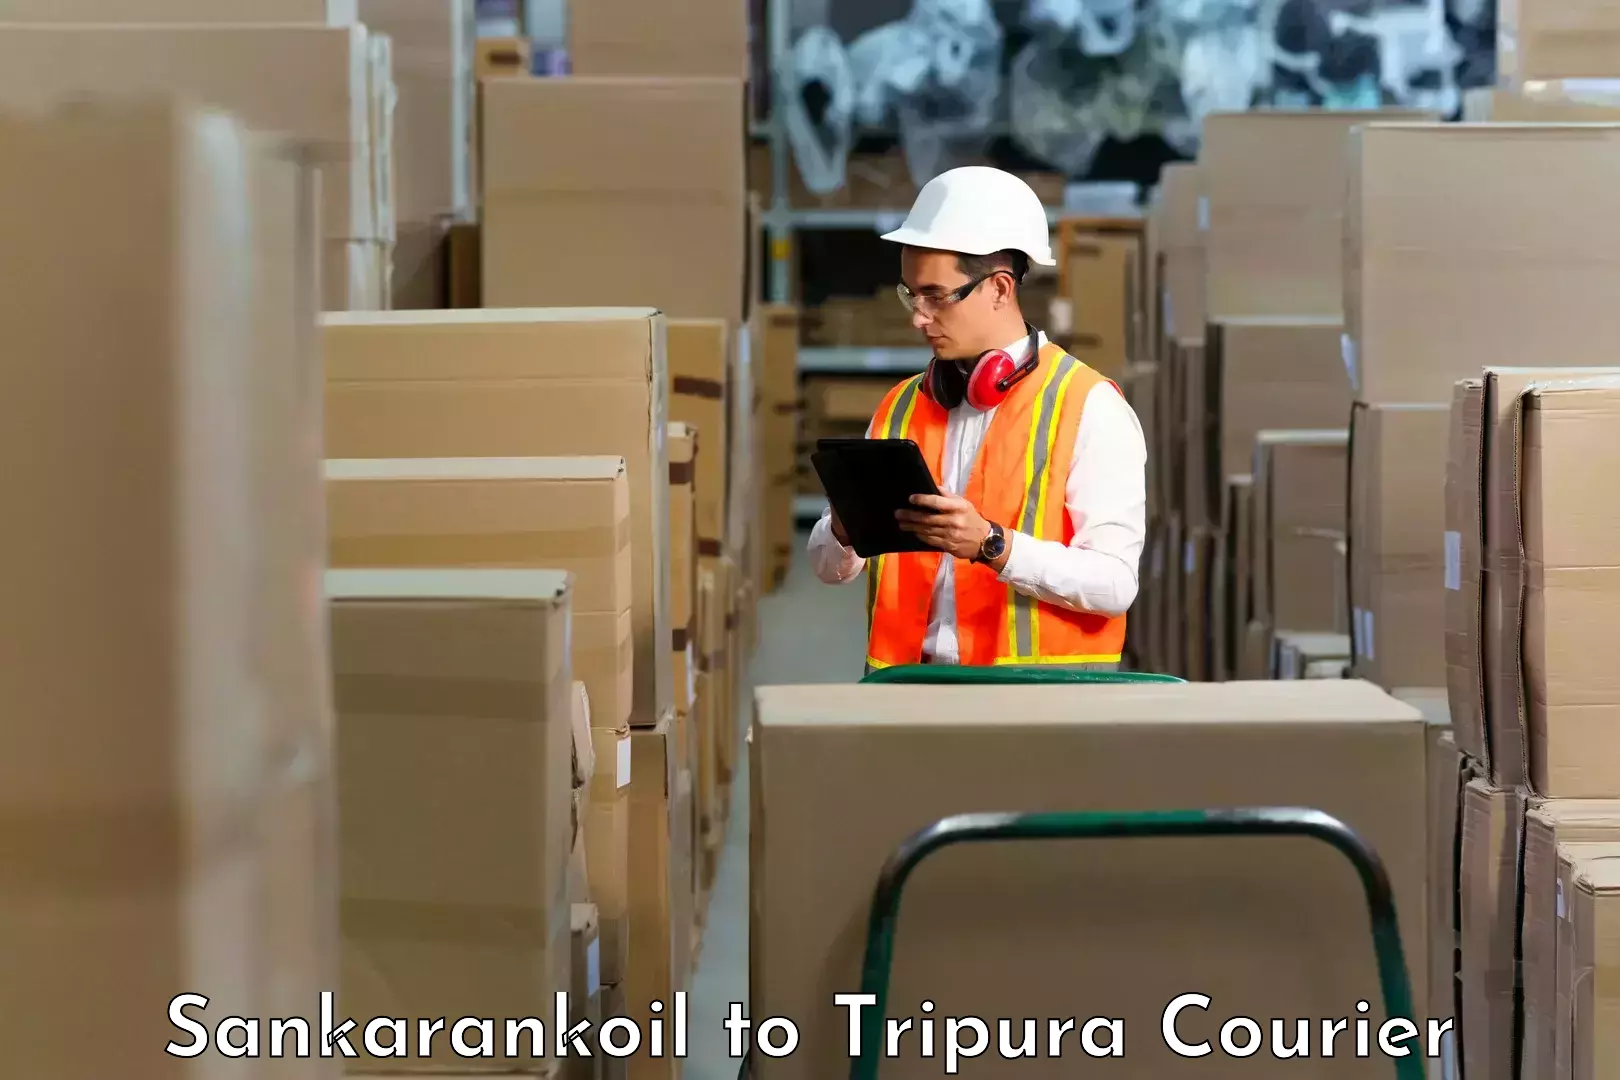 Urgent courier needs Sankarankoil to Udaipur Tripura